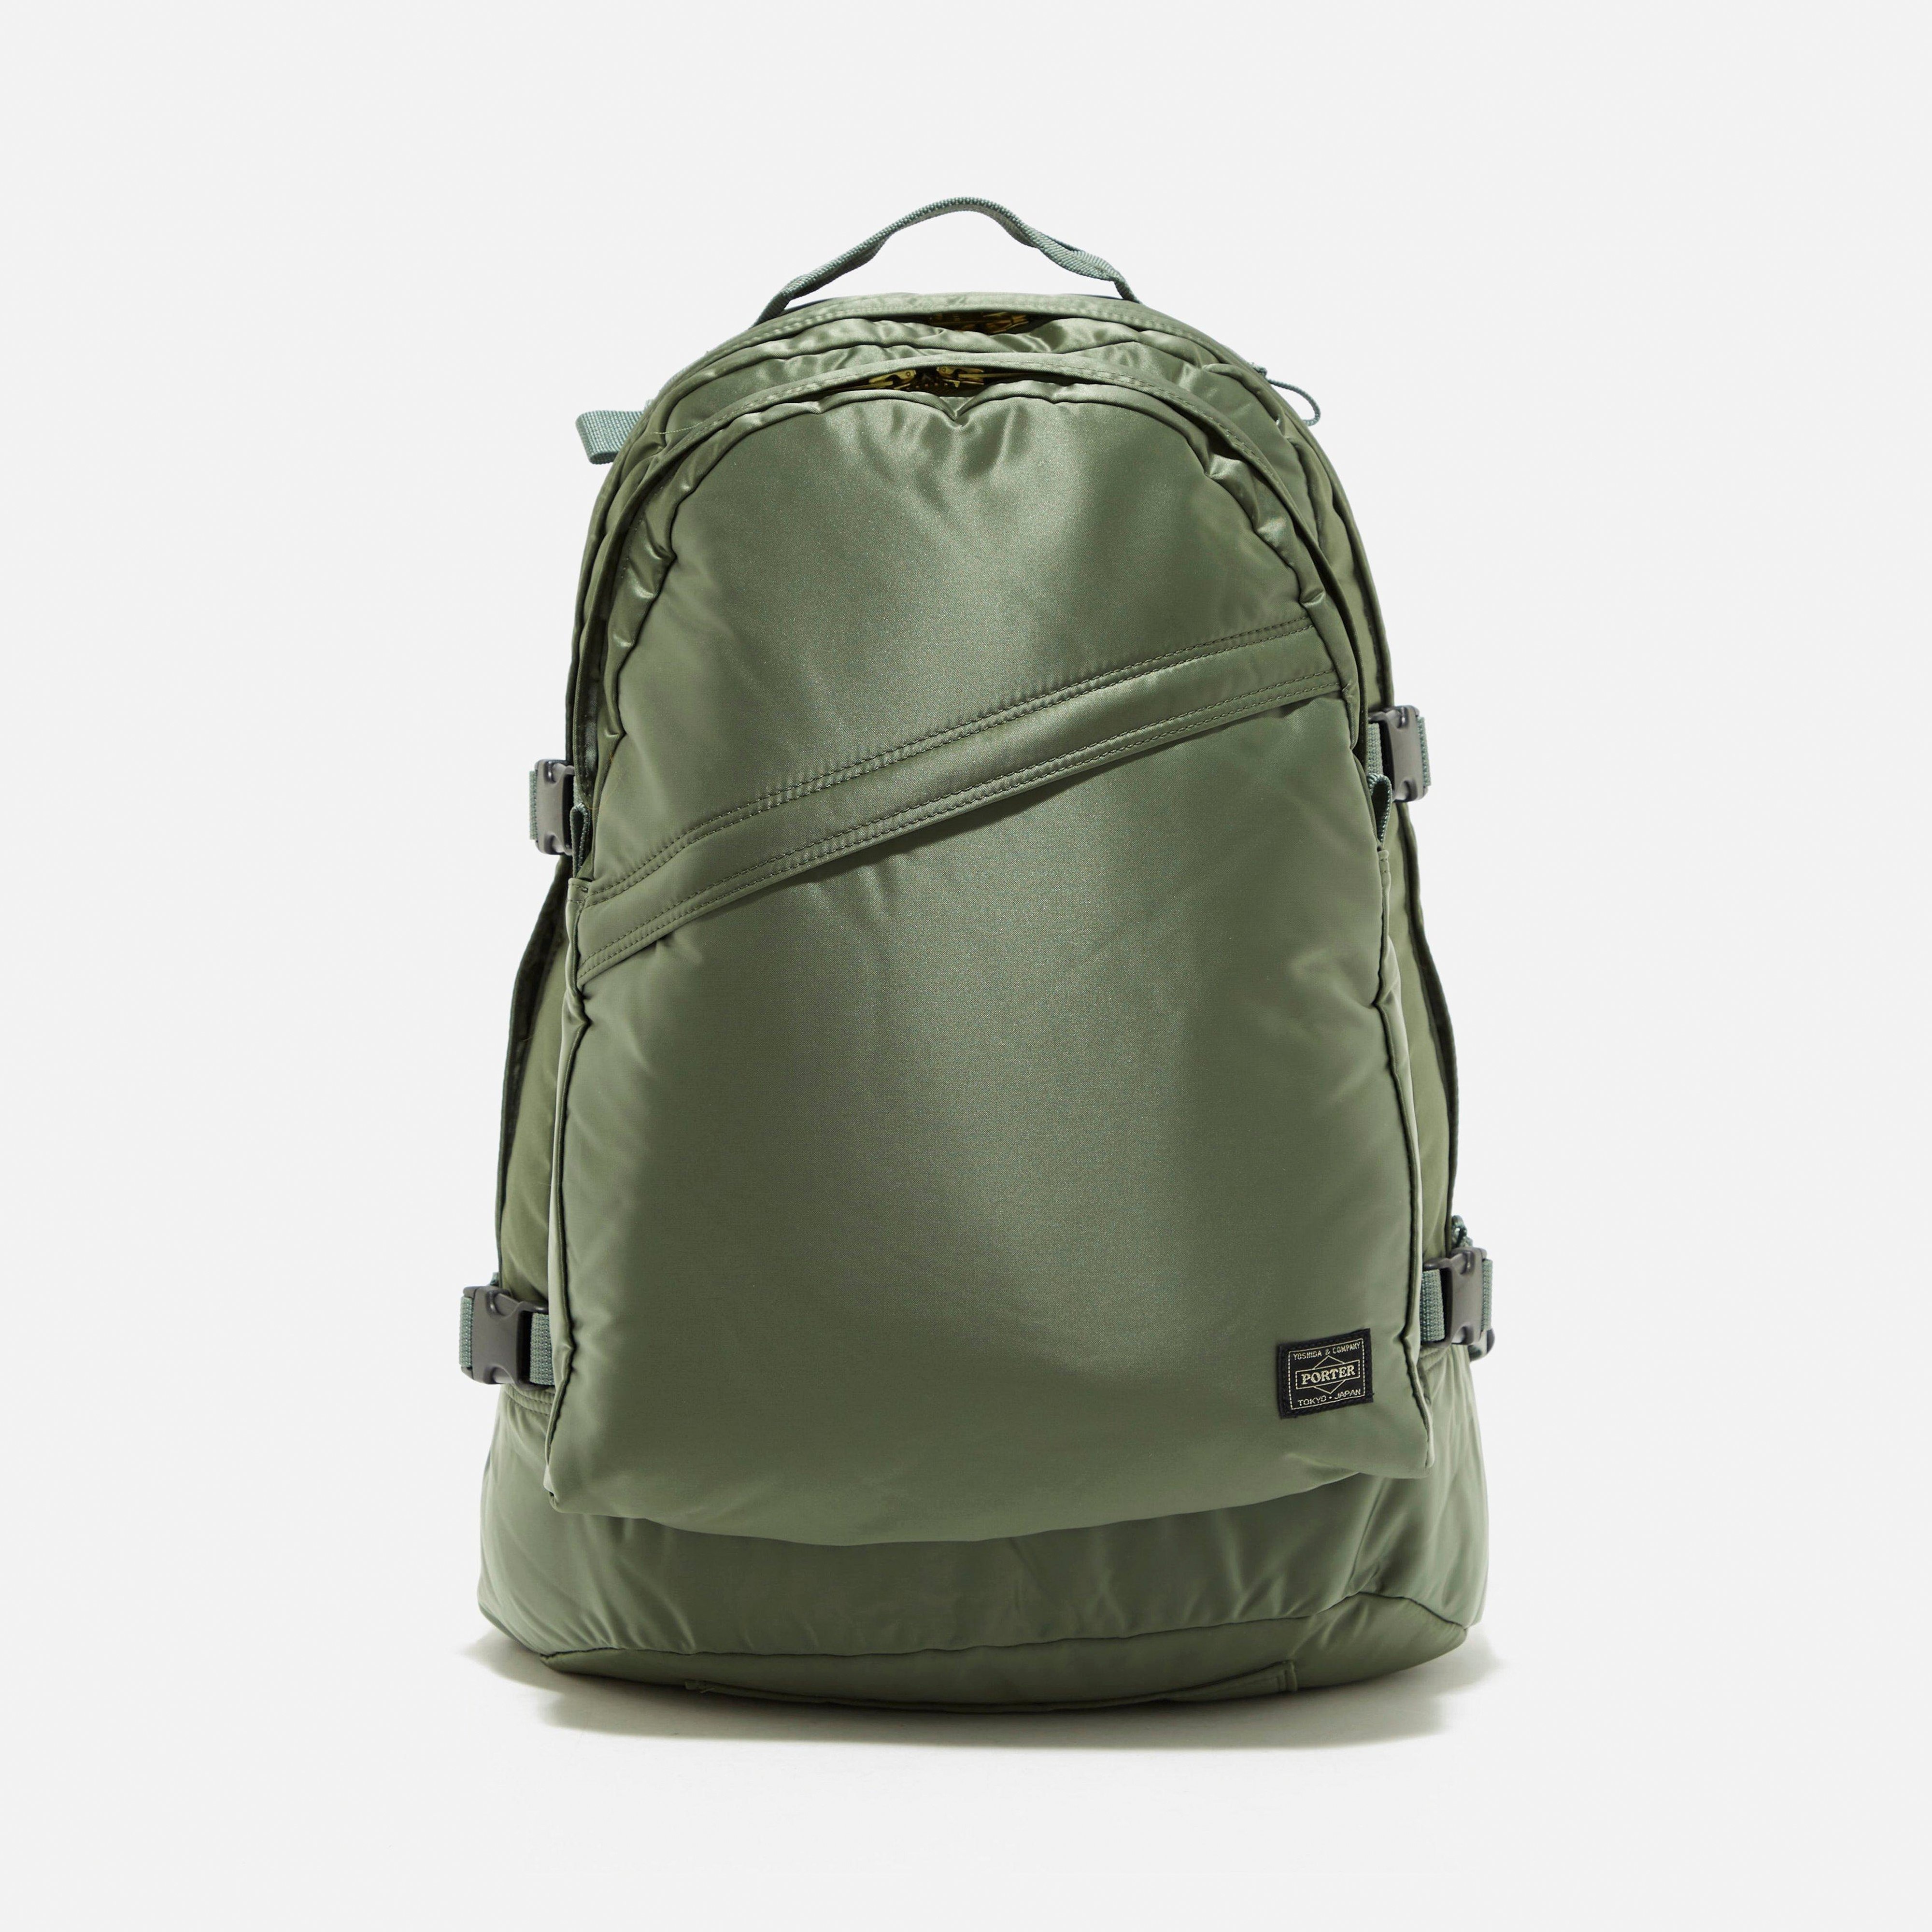 Green Porter Yoshida Co Tanker Day Pack Backpack 23l Hip